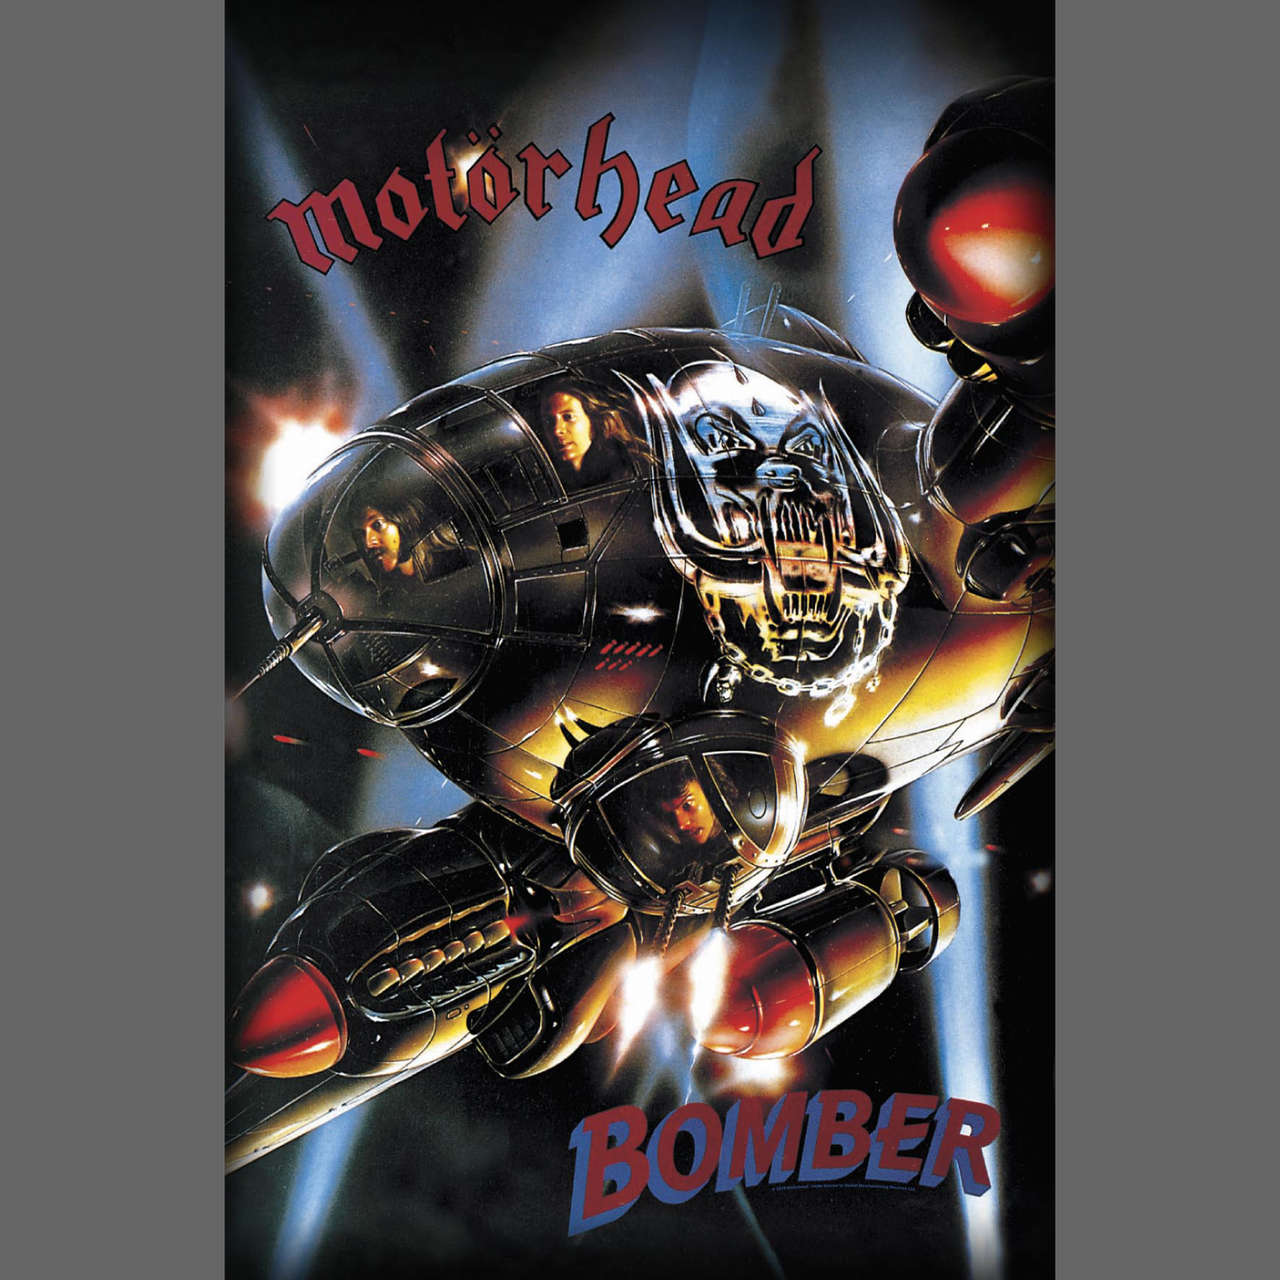 Motorhead - Bomber (Textile Poster)